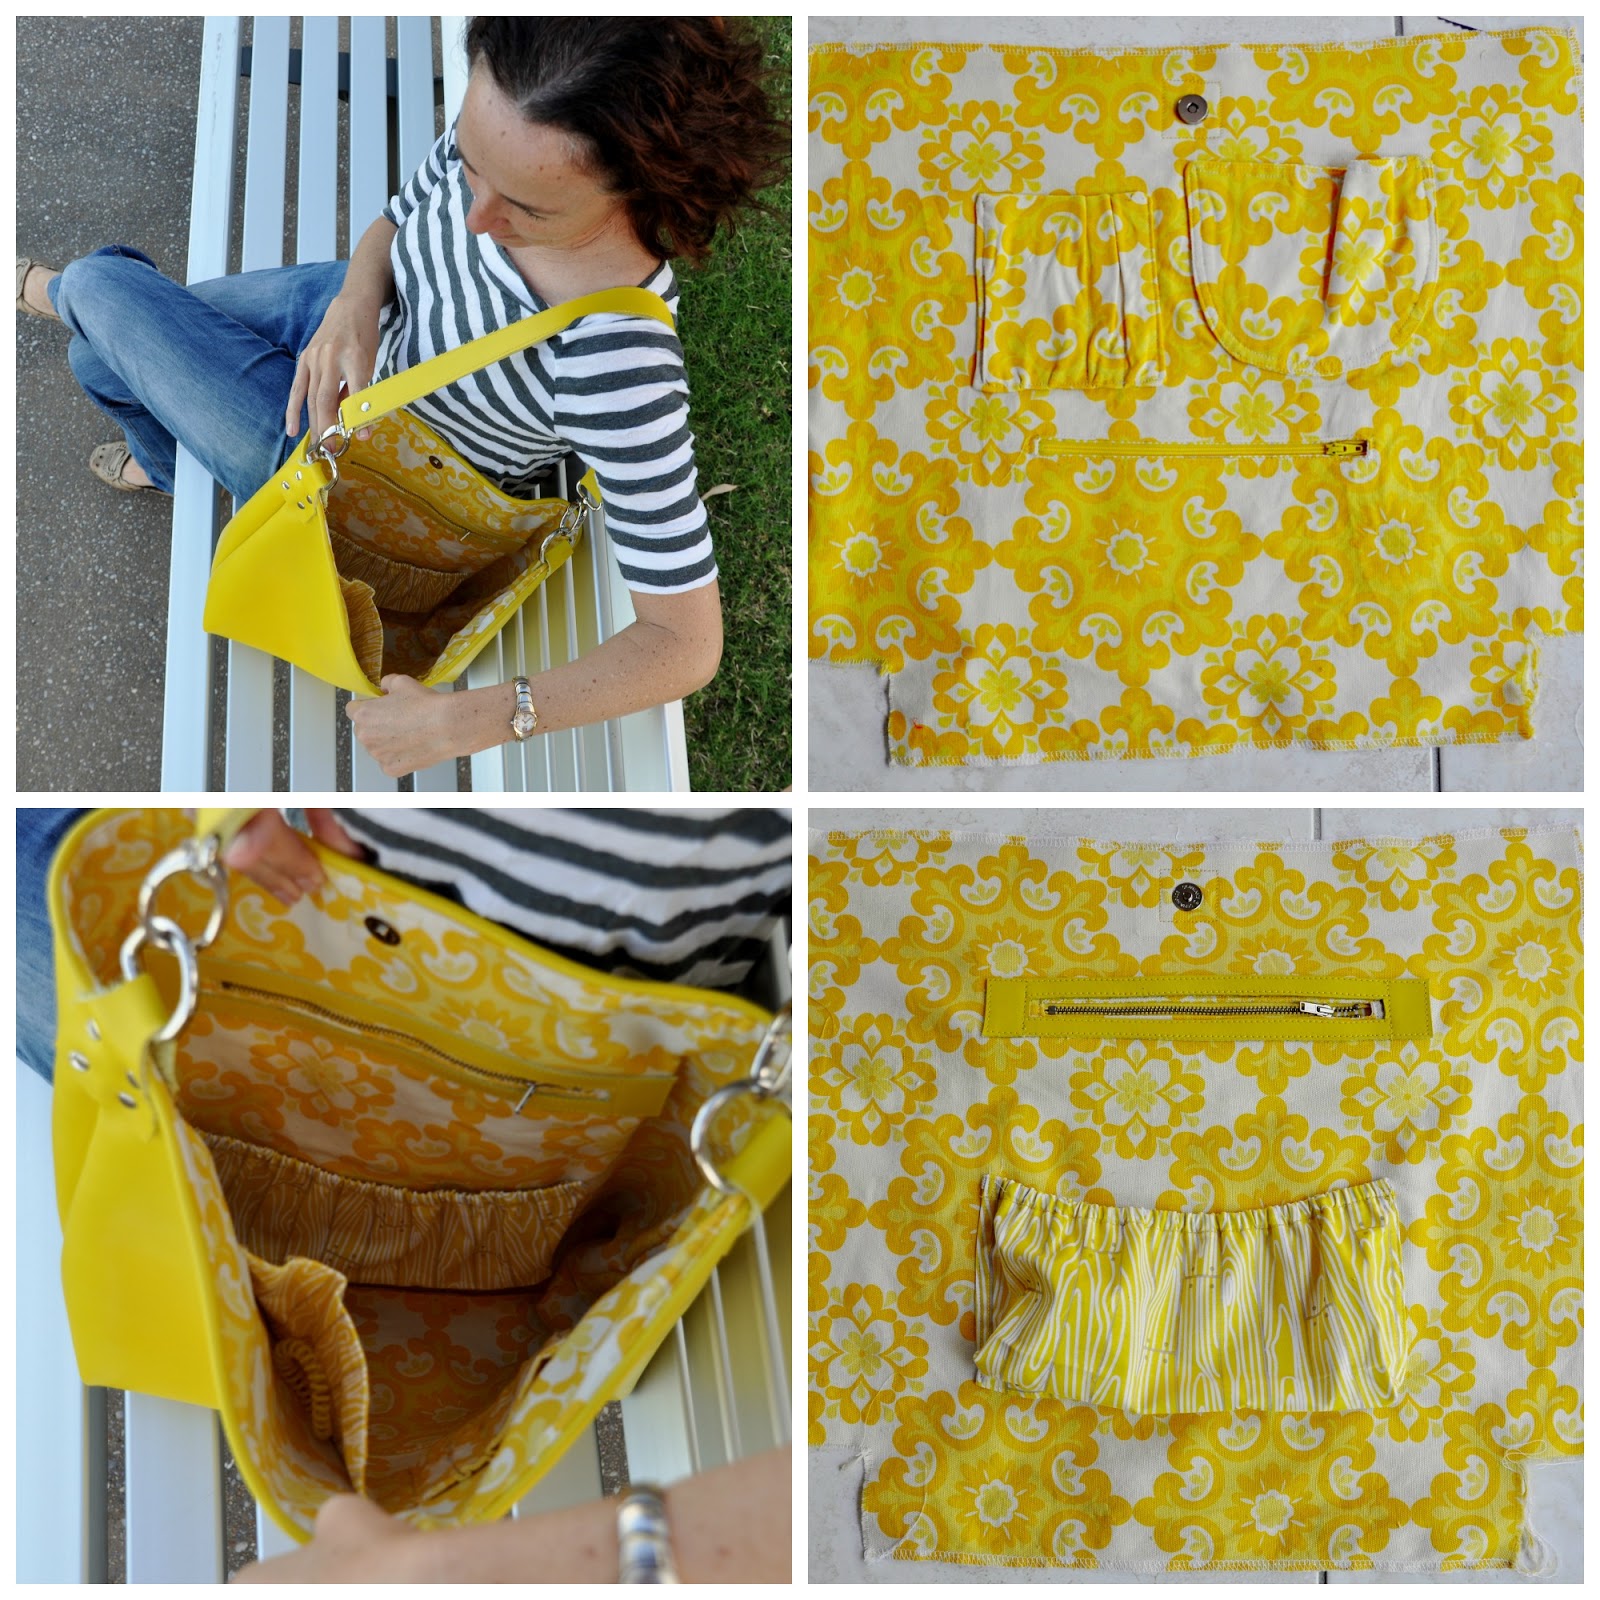 Bloom's Endless Summer: Yellow leather hobo bag